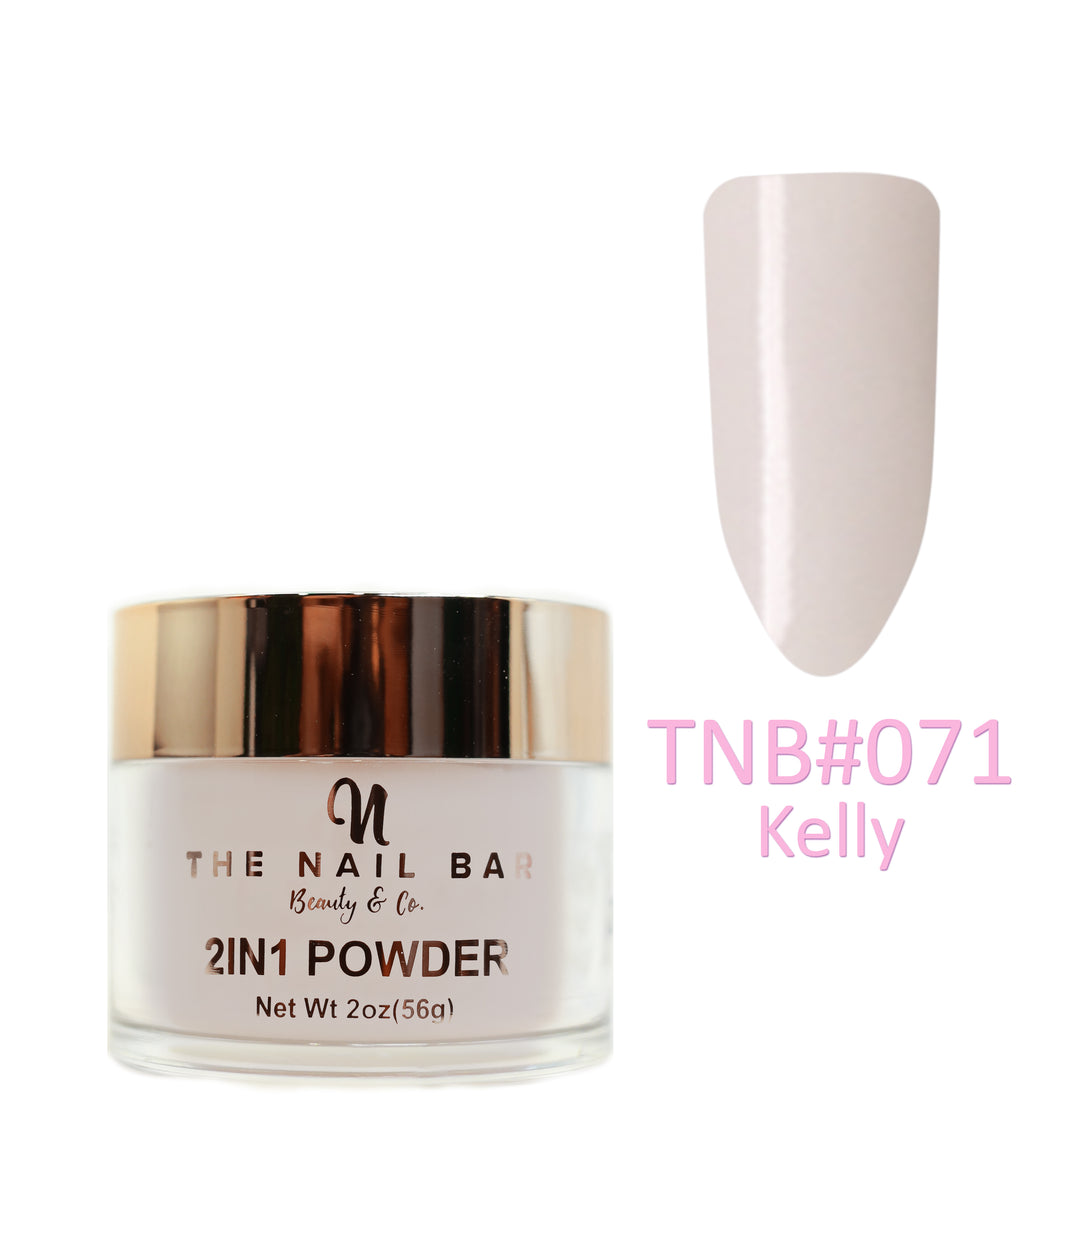 2-In-1 Dipping/Acrylic colour powder (2oz) -Kelly - The Nail Bar Beauty & Co.